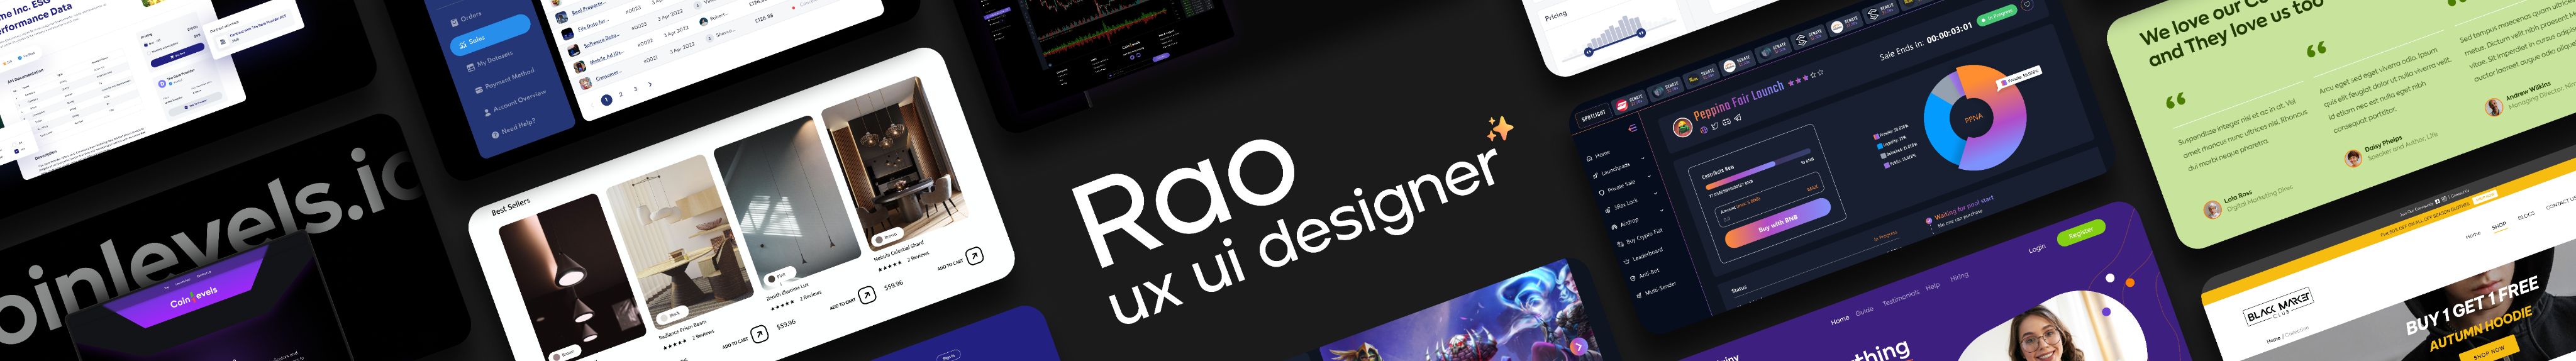 UX UI Designer - RAO profil başlığı